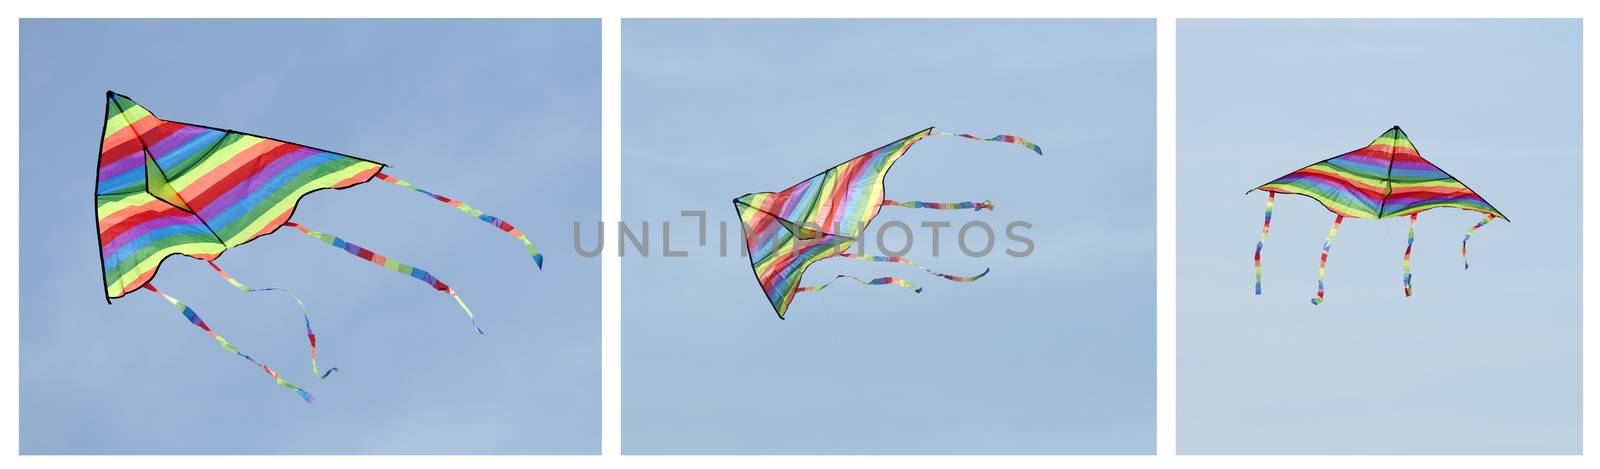 Multicolored kite by deyan_georgiev